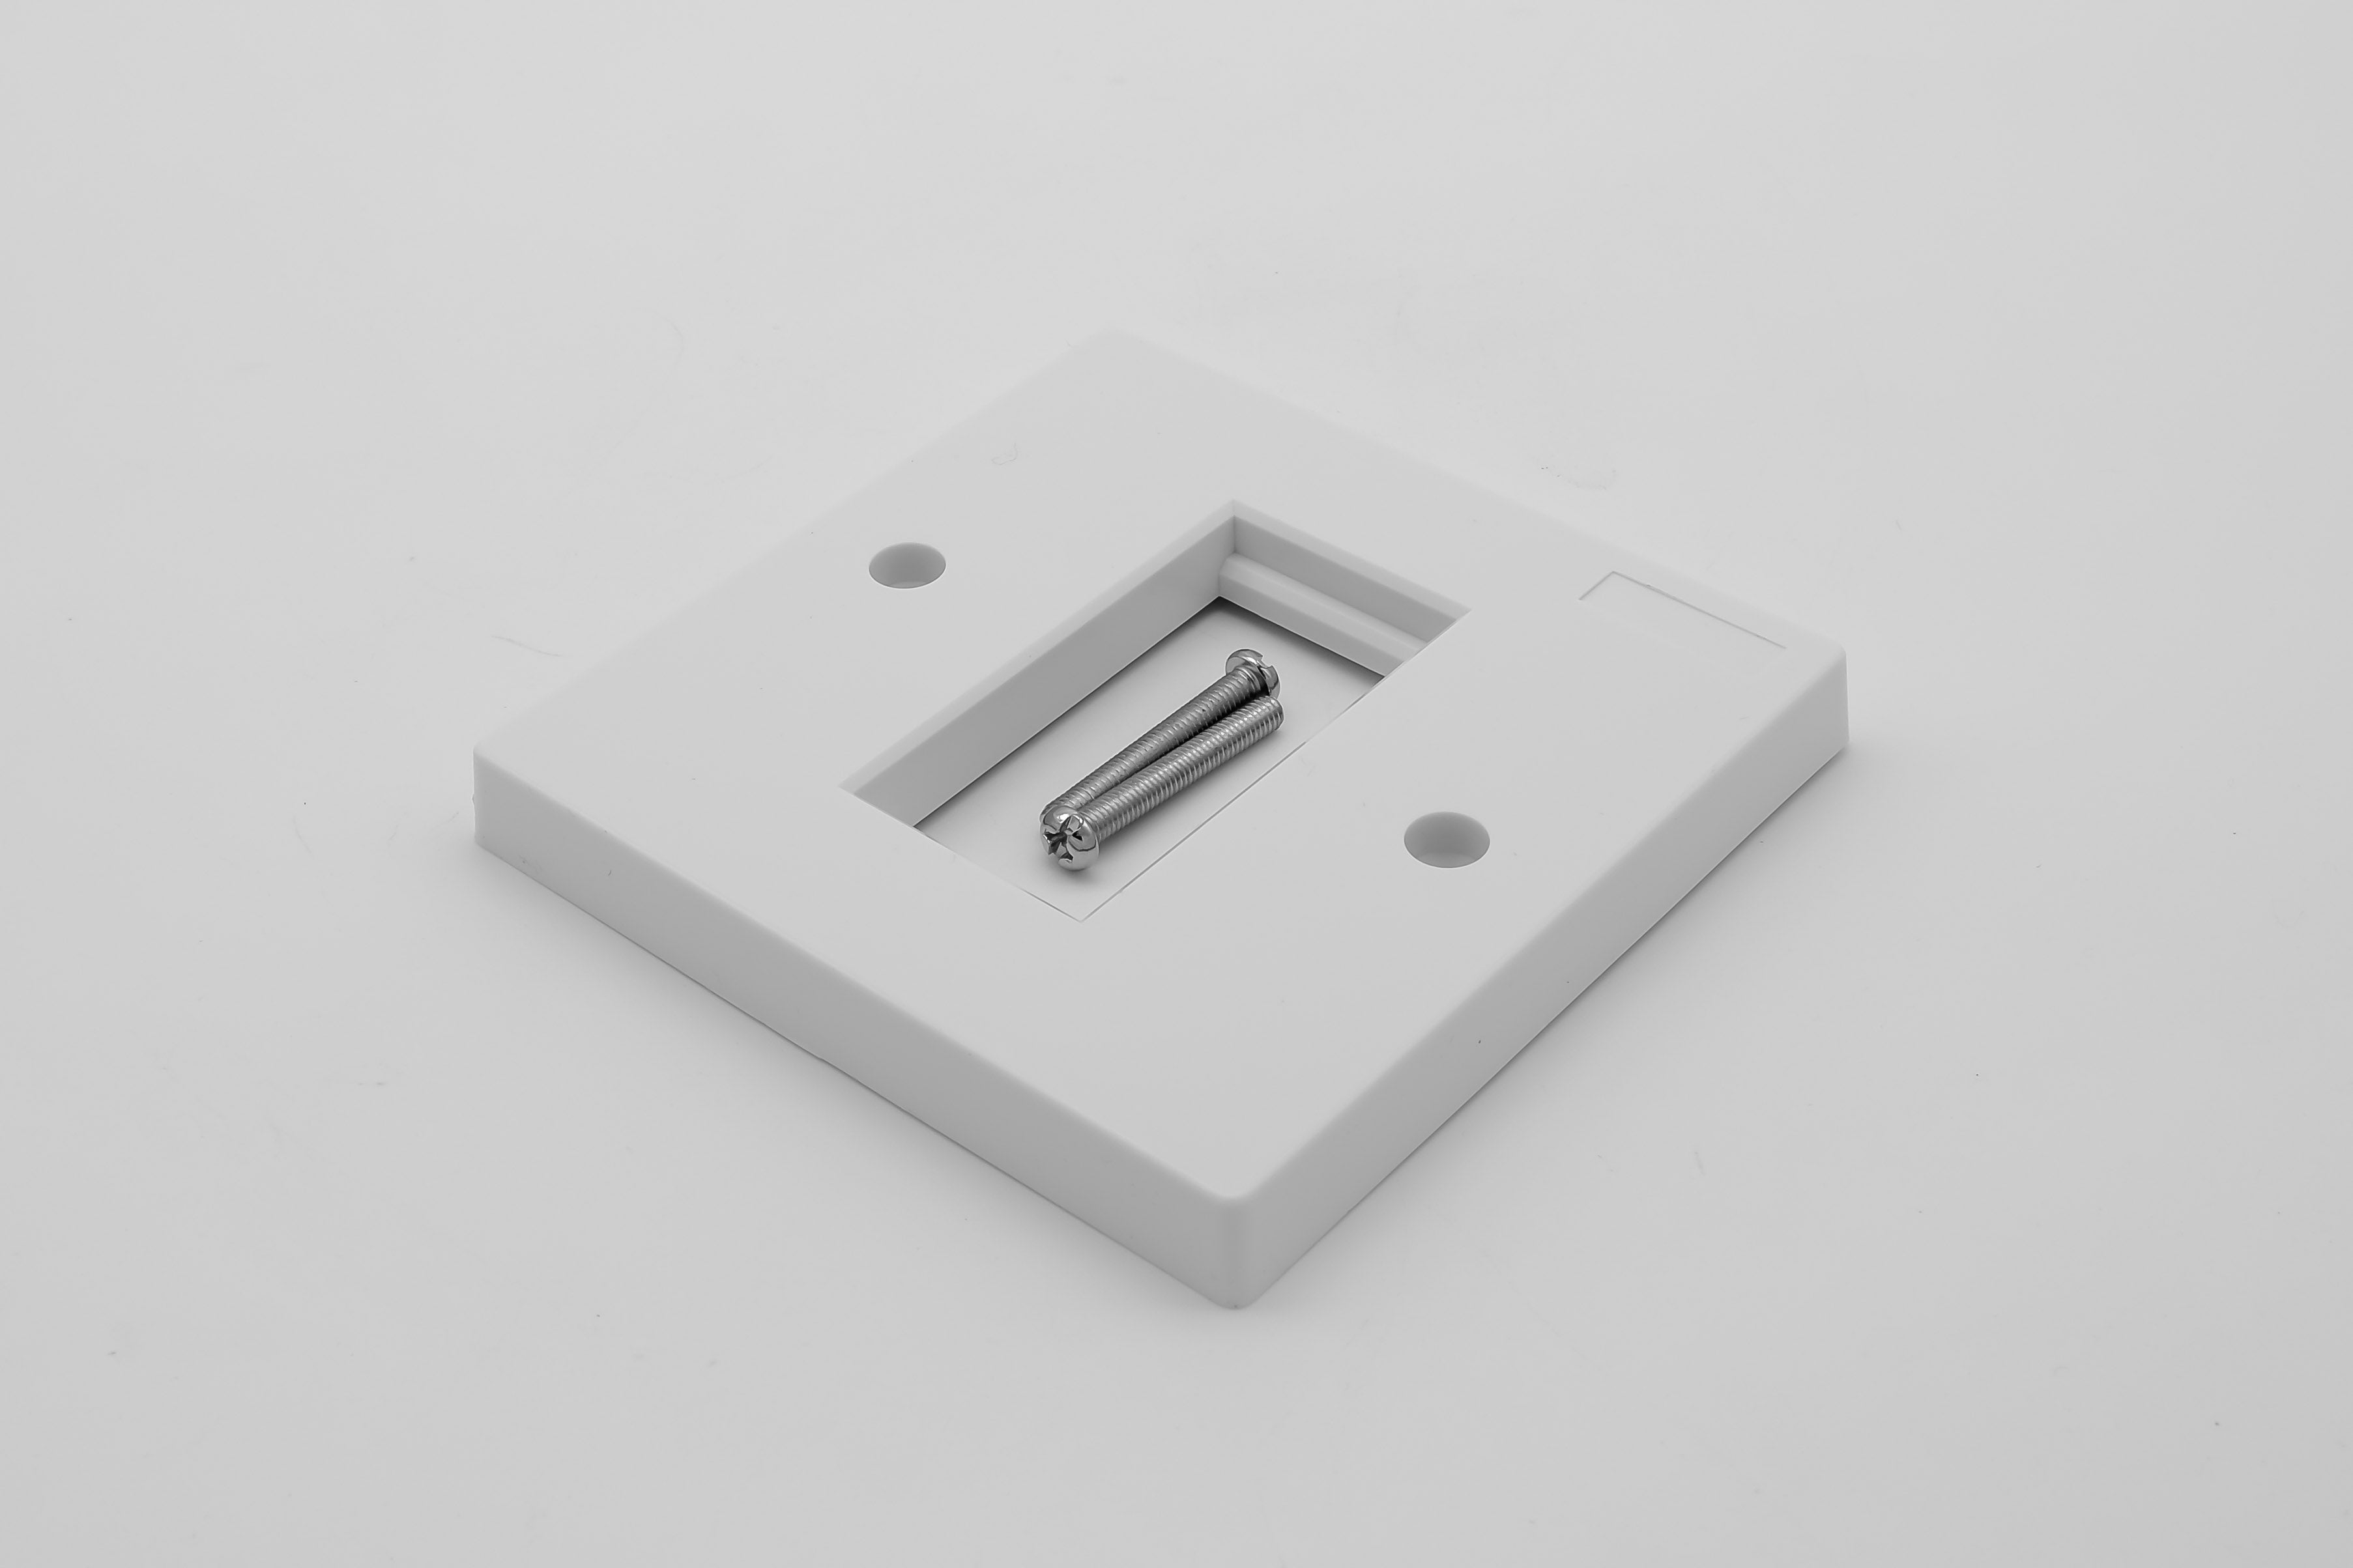 modular faceplate -Low Profile Single Gang (1 Slot) Faceplate for 1 x Euro Modules - White